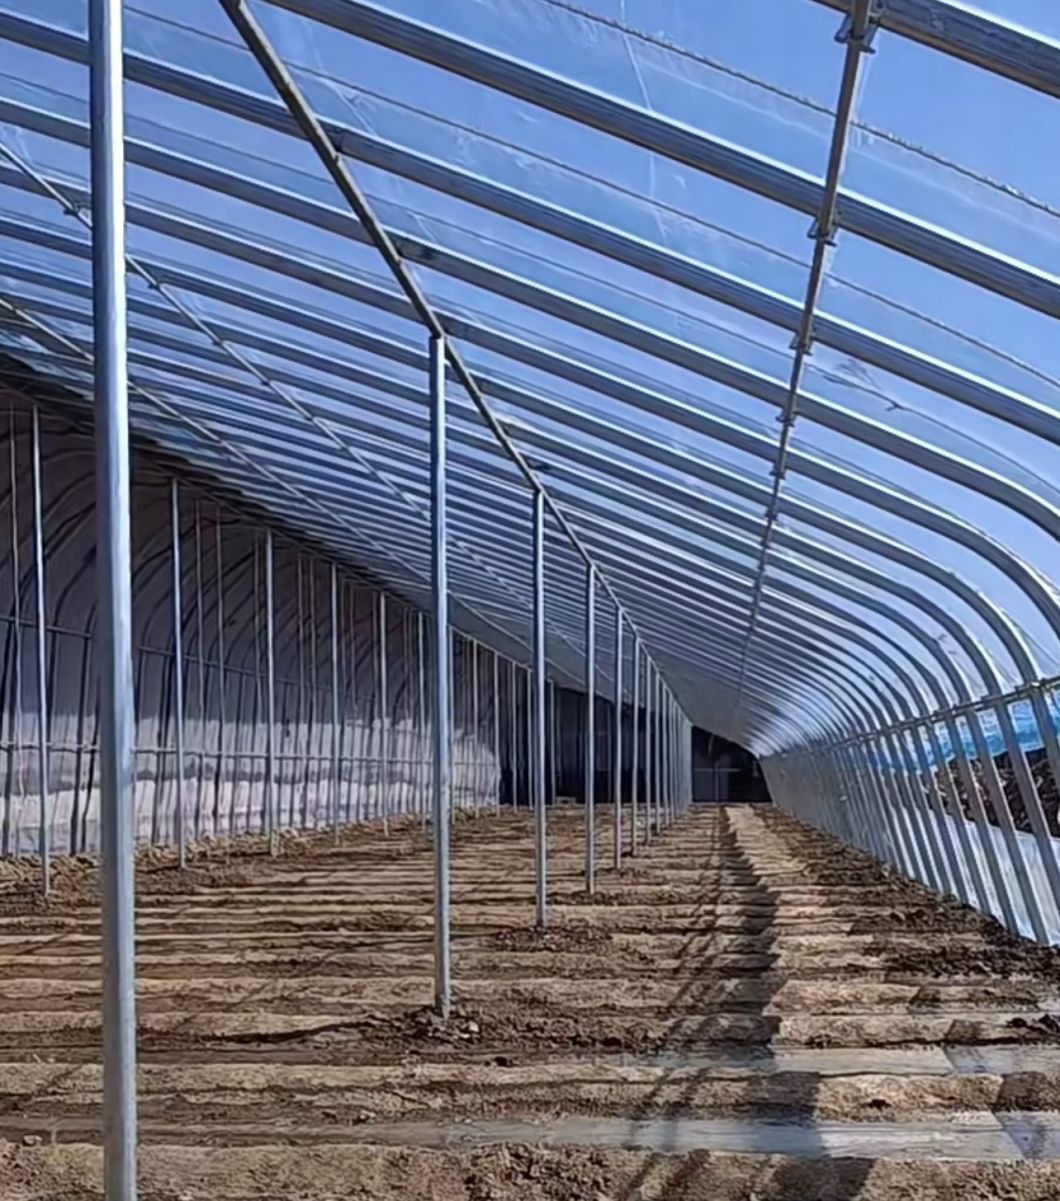 Aquaculture Vegetable Film Strawberry Flower Sunlight Greenhouse